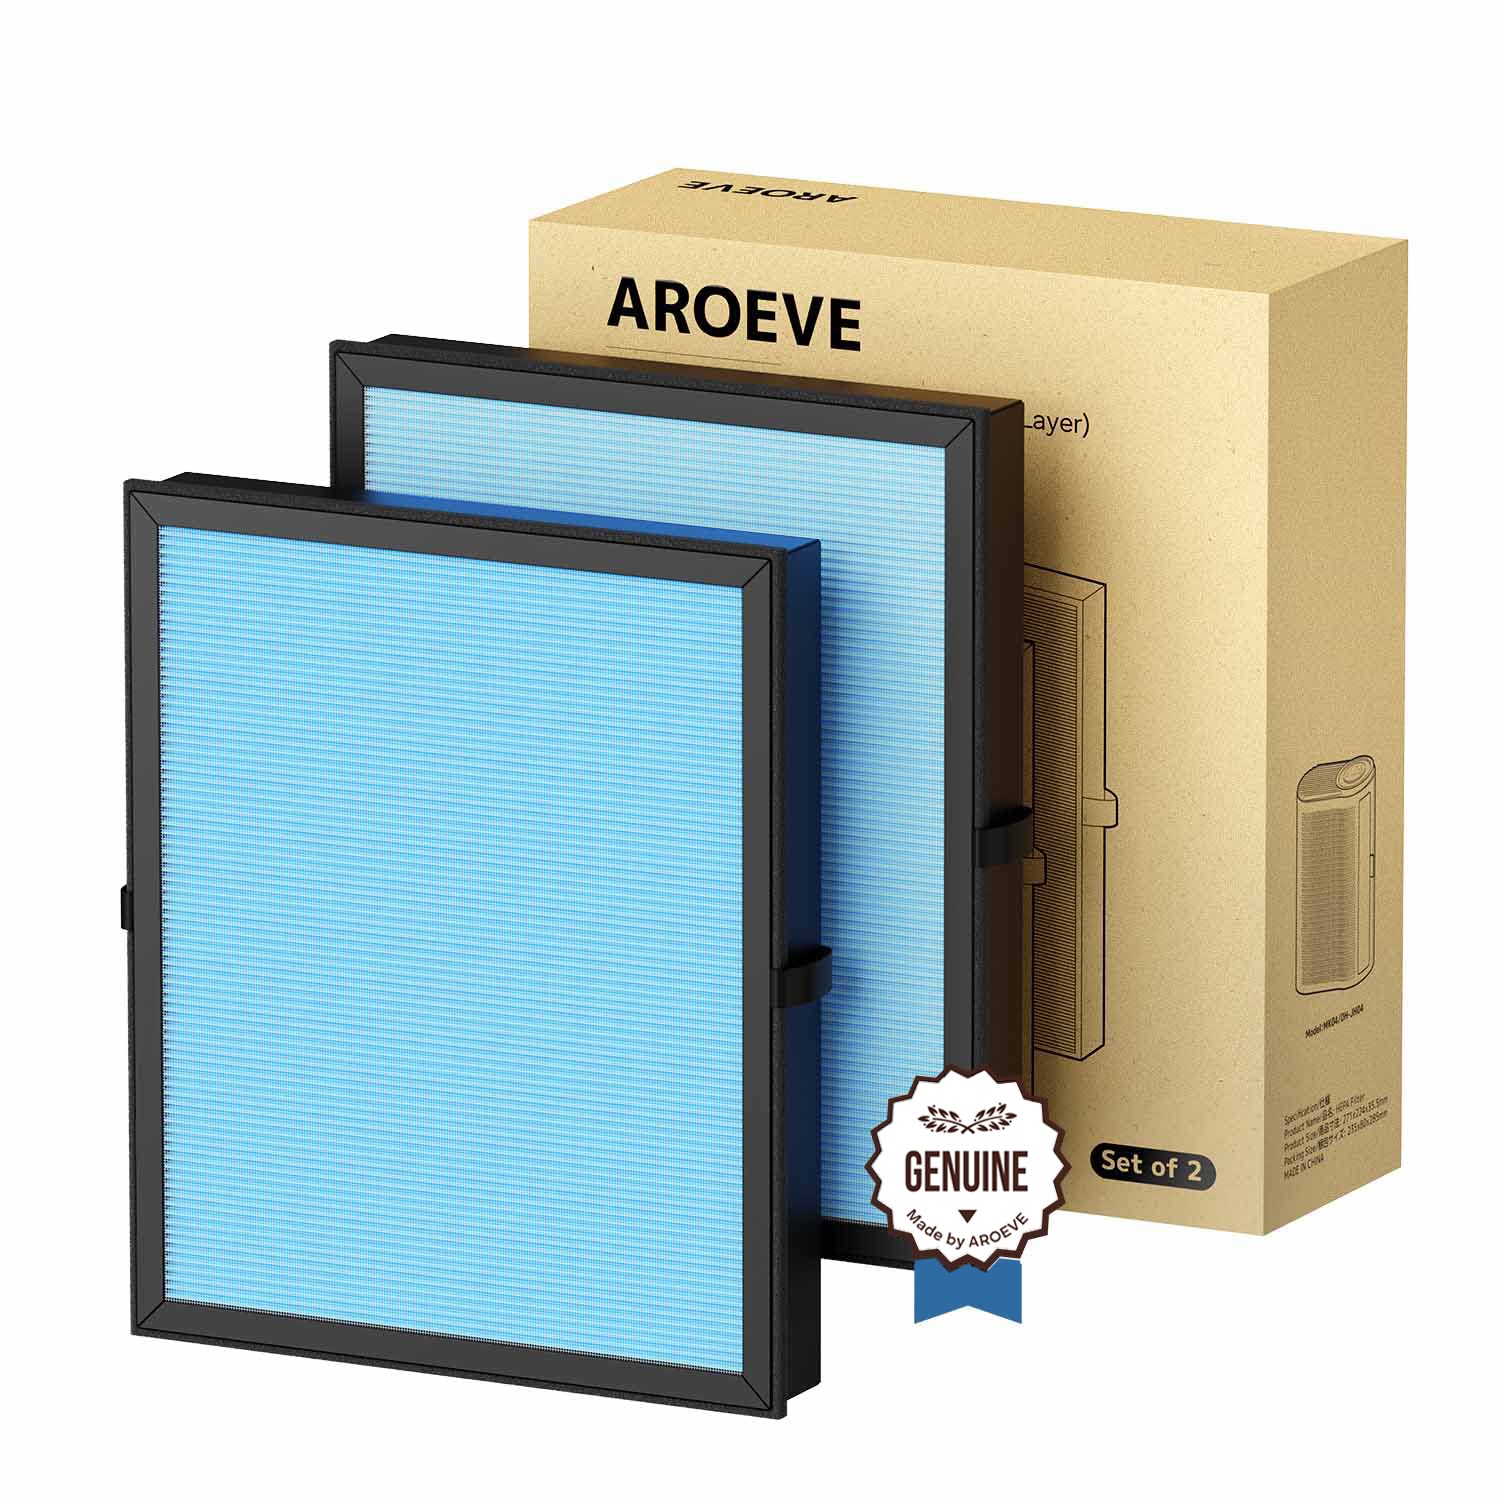 AROEVE MK04 Air Filter H13 Ture HEPA Filter Suitable for MK04 for Dust, Pet Dander, Smoke, Pollen for Bedroom and Office- Standard Version(2 Pack)